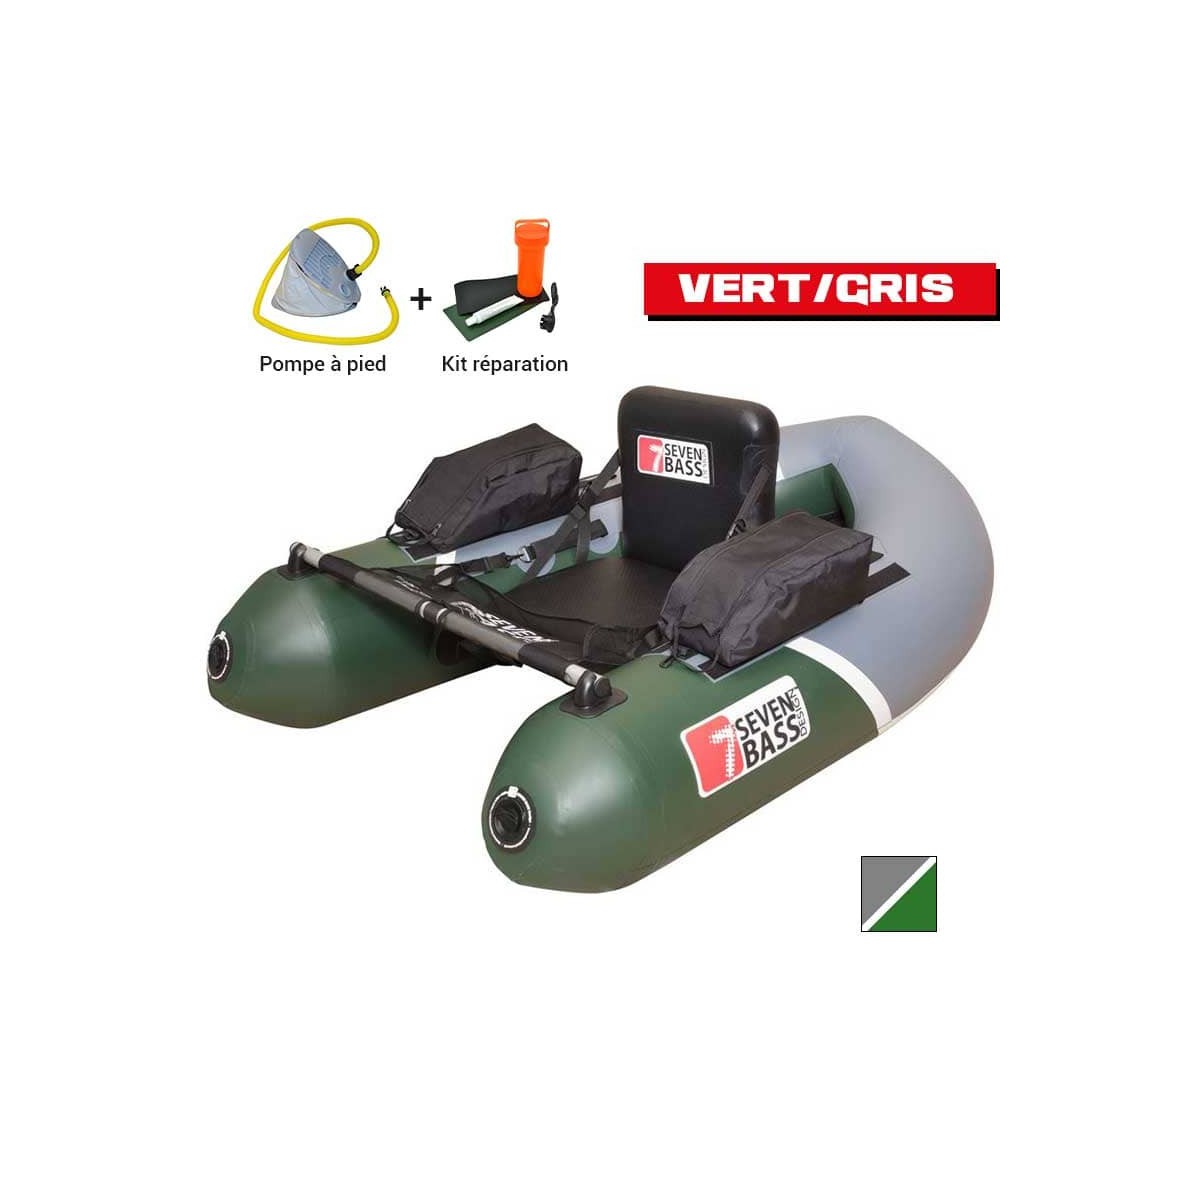 Float tube brigad racing 160